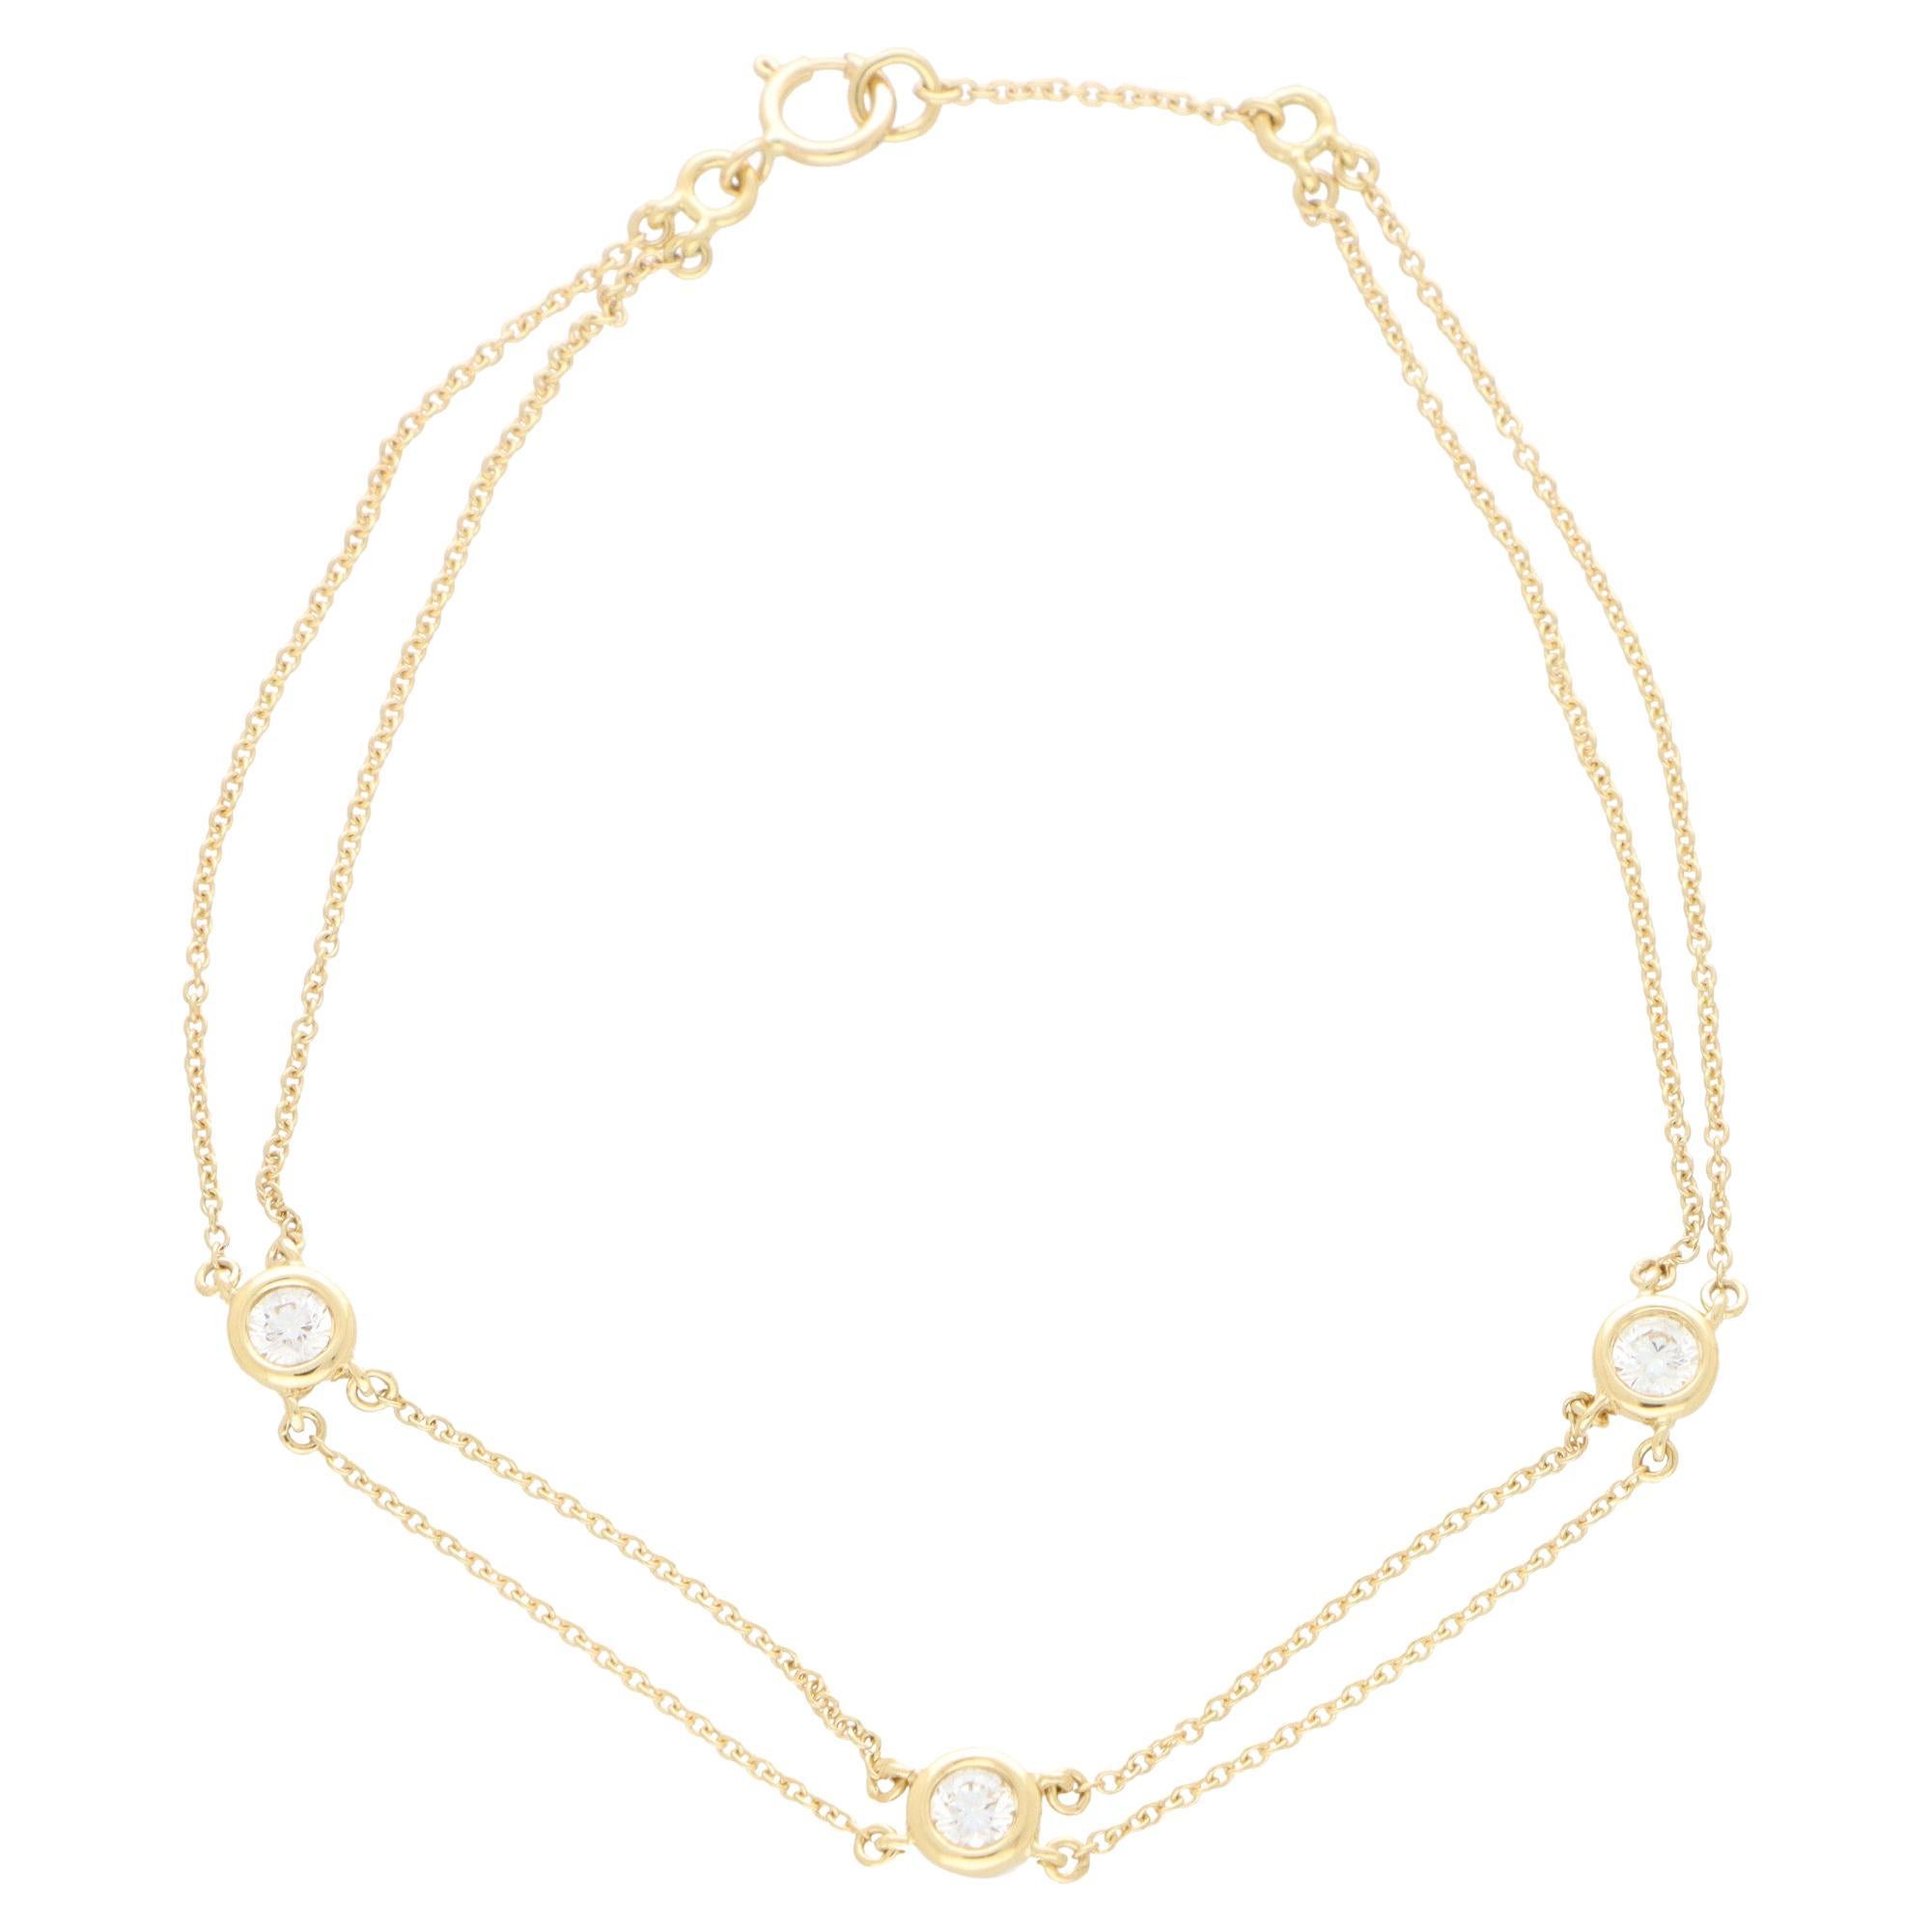 Contemporary Three Diamond Chain Bracelet Set in 18k Yellow Gold